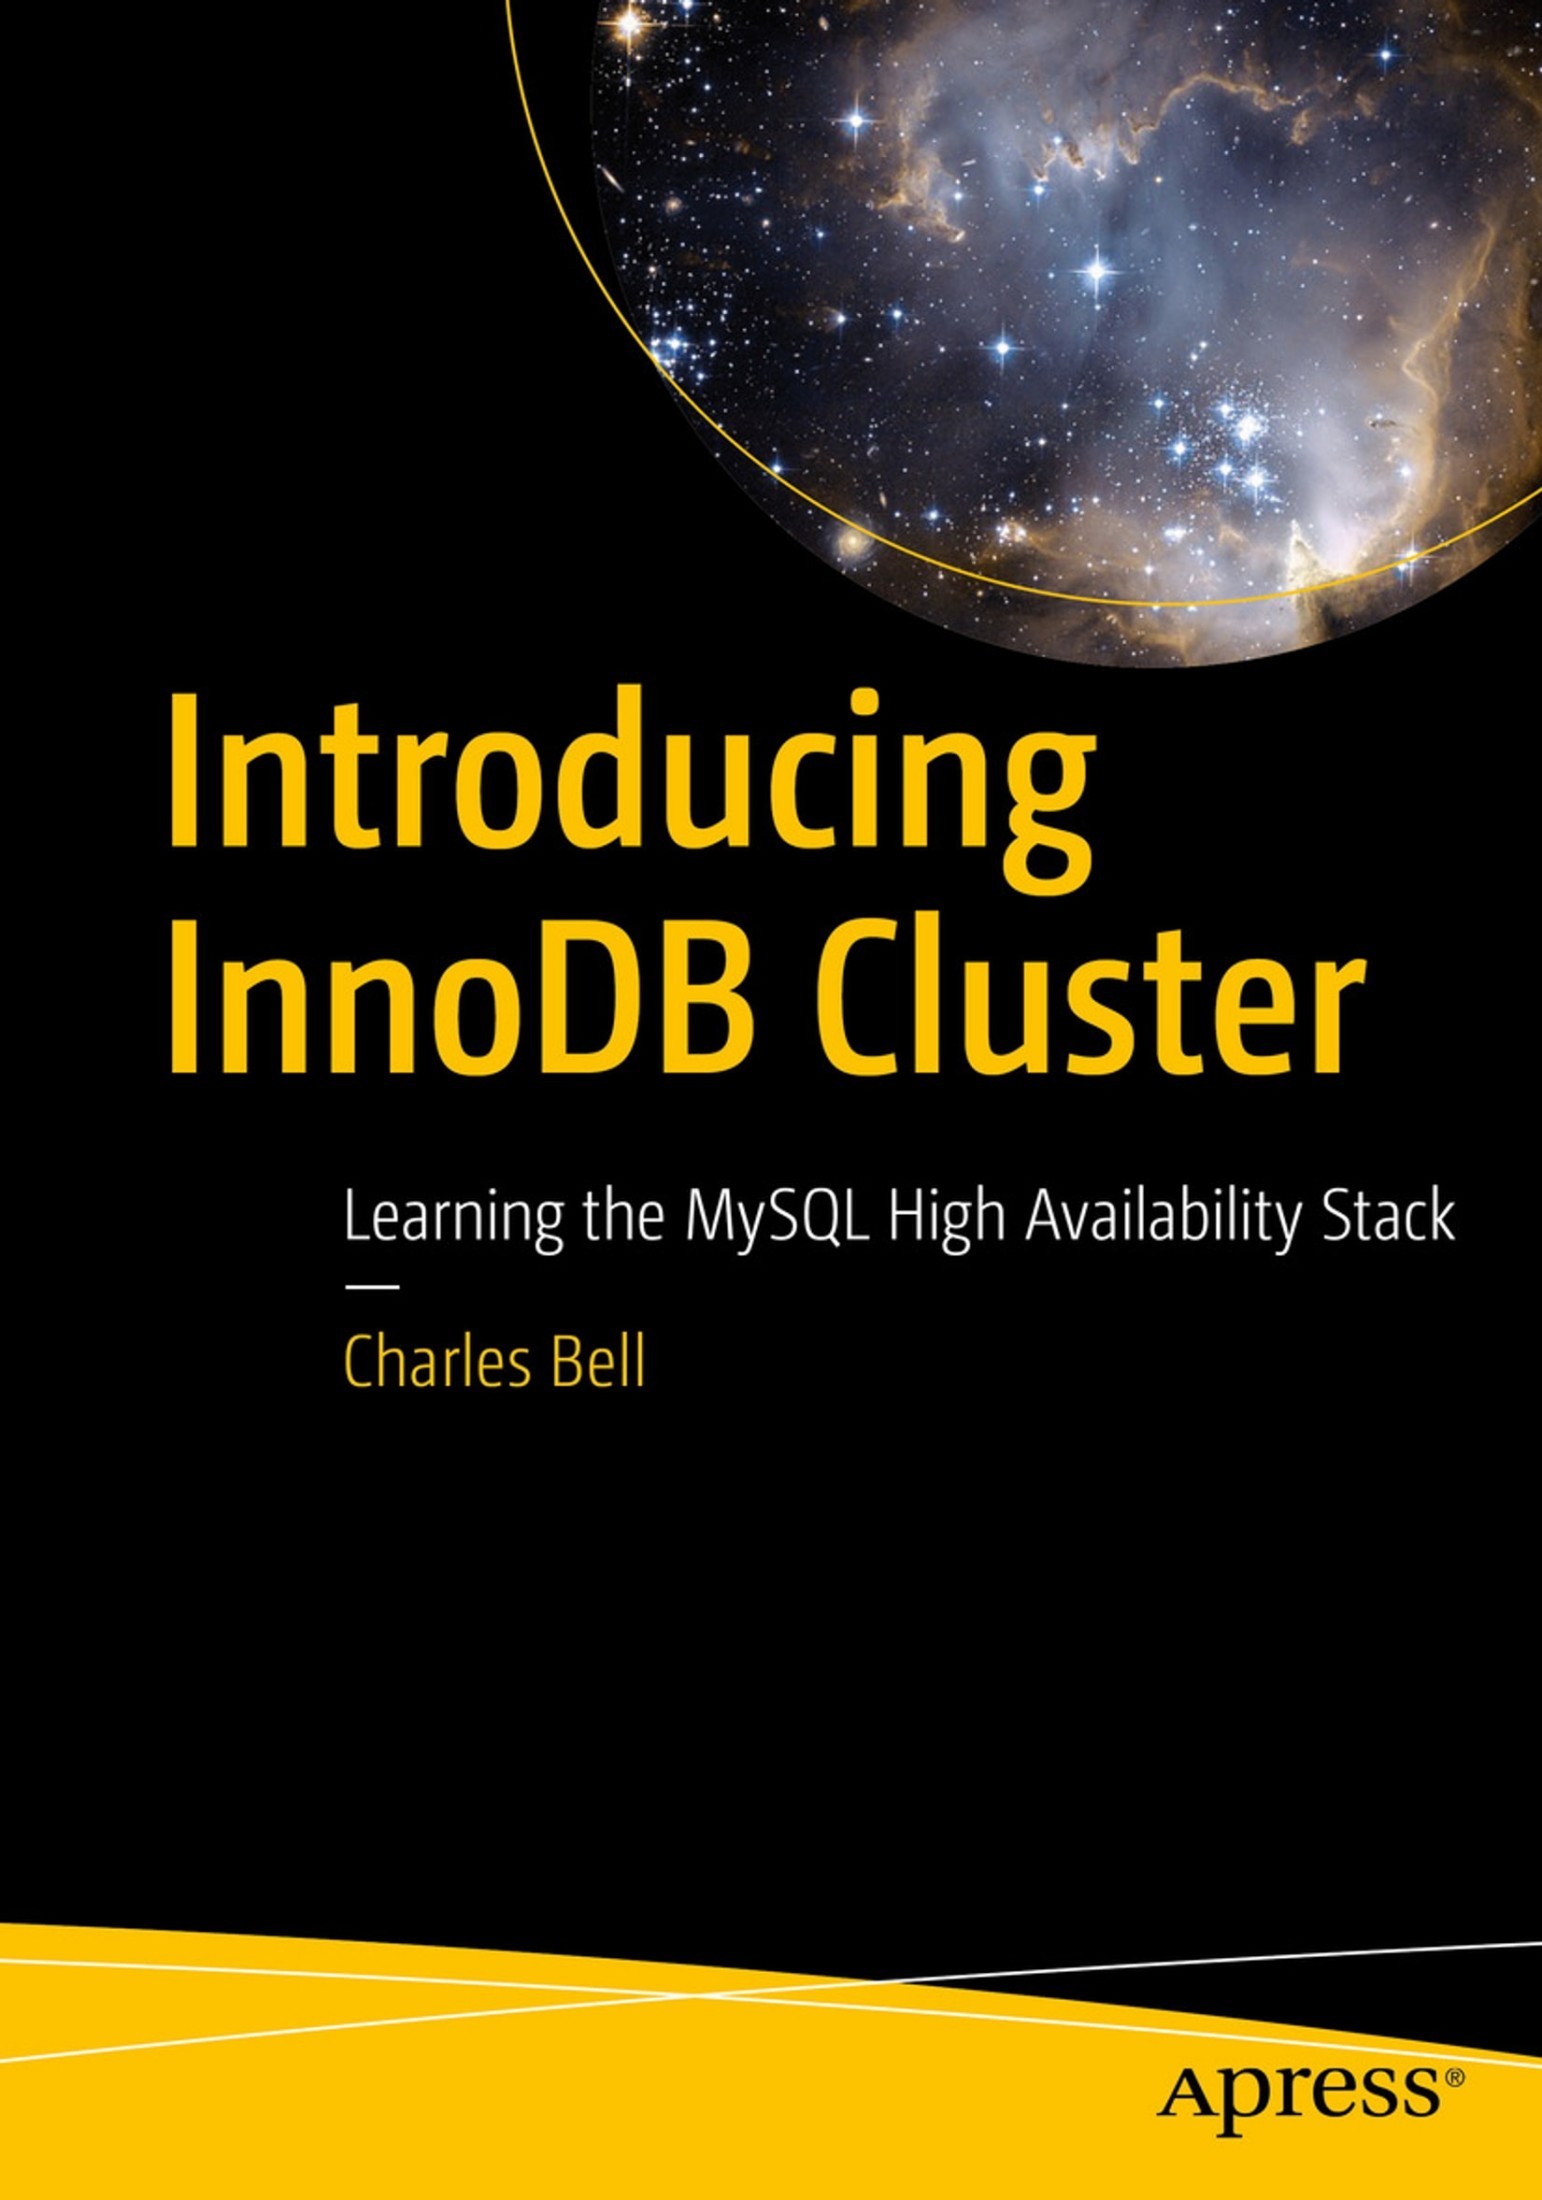 Introducing InnoDB Cluster